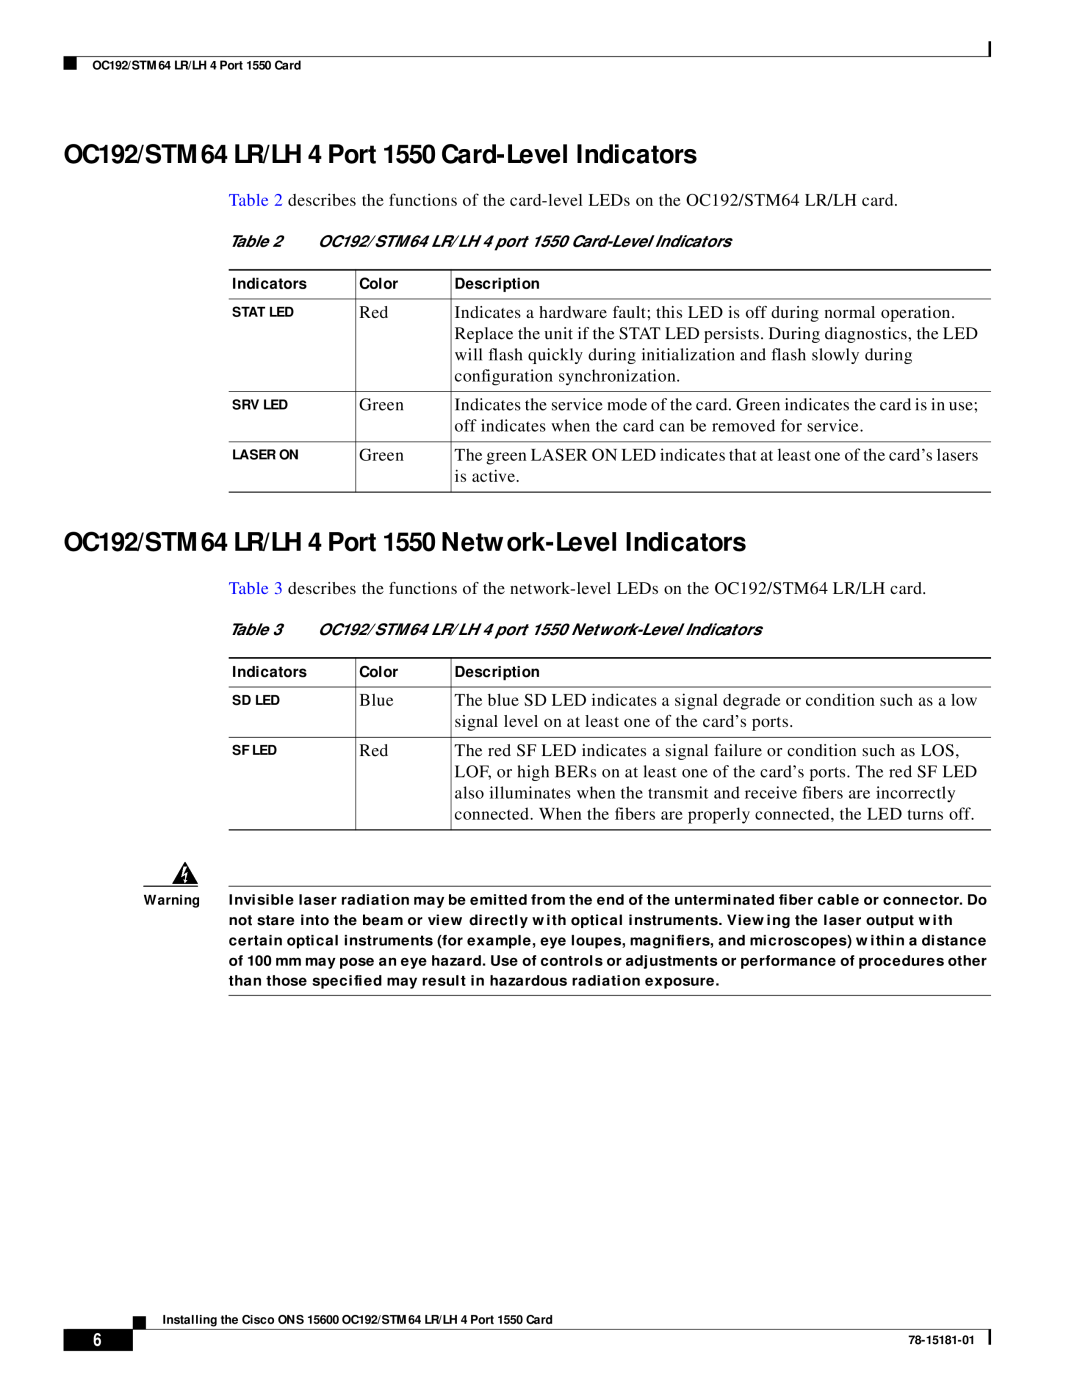 Cisco Systems OC192/STM64 LR/LH 4 Port 1550 Card-Level Indicators, OC192/STM64 LR/LH 4 port 1550 Card-Level Indicators 